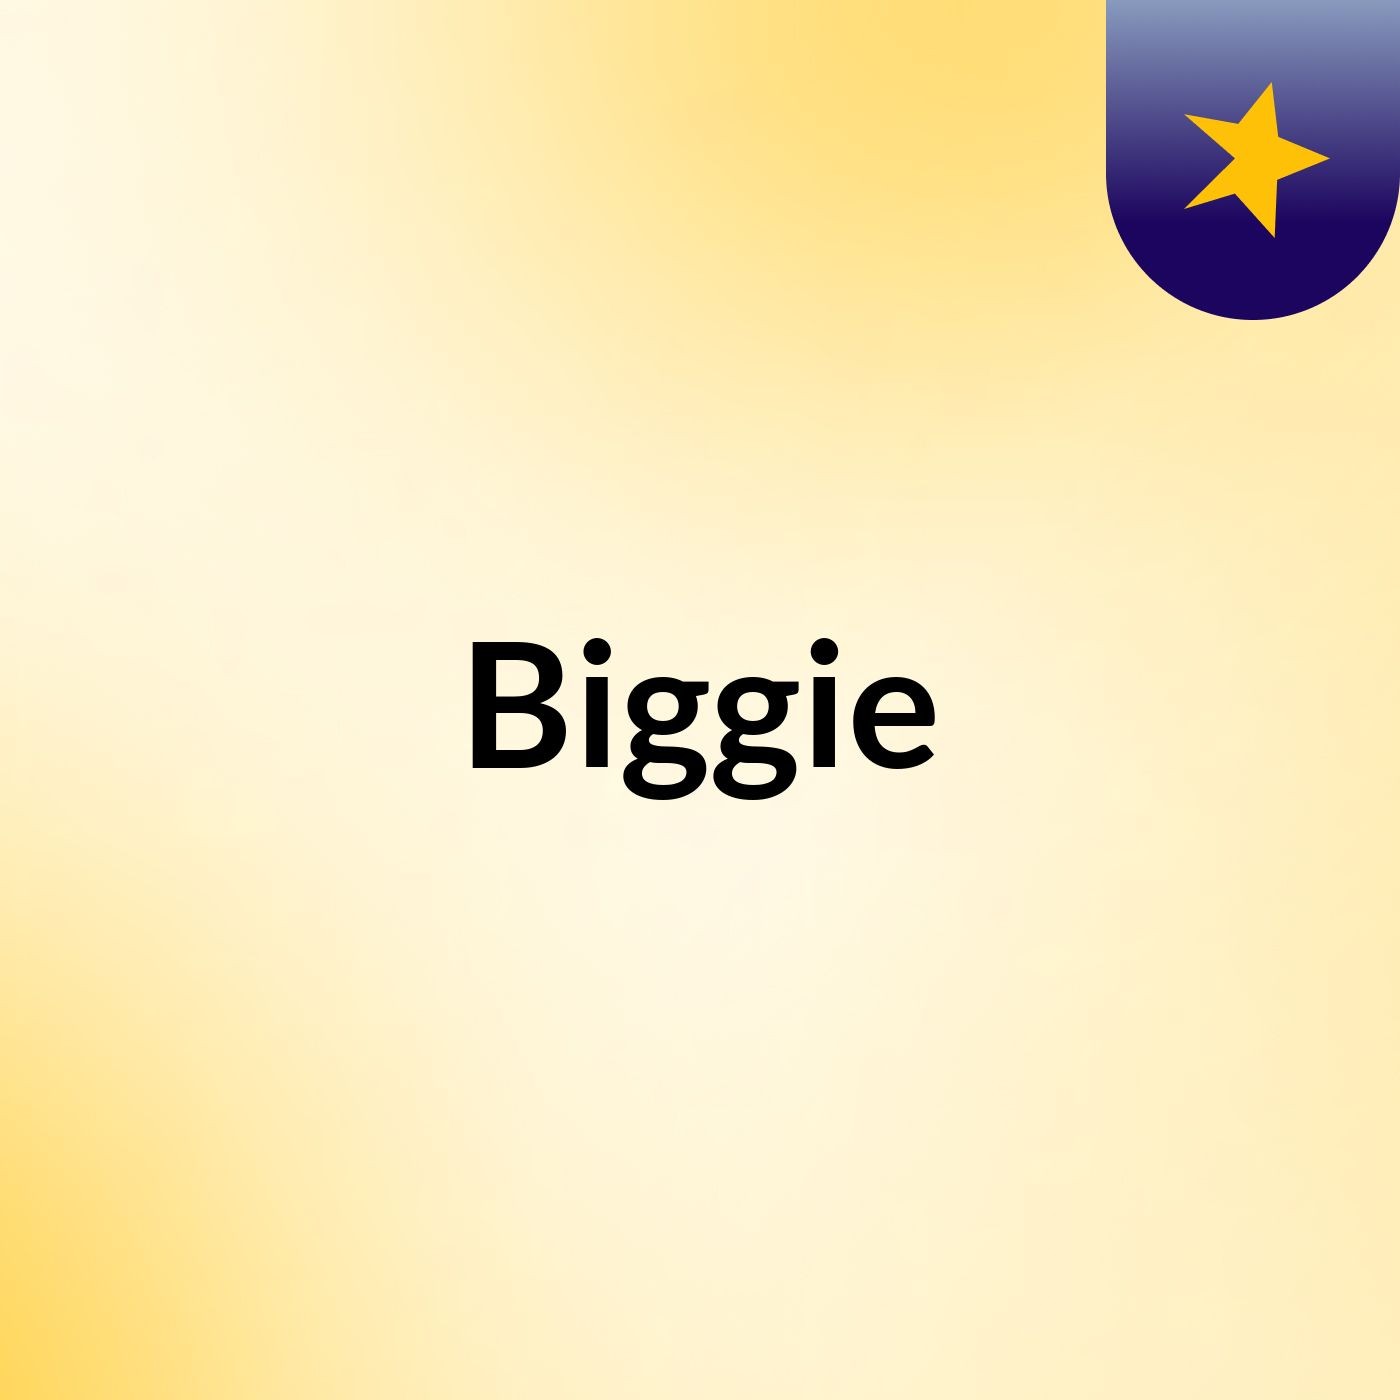 Episode 5 - Biggie